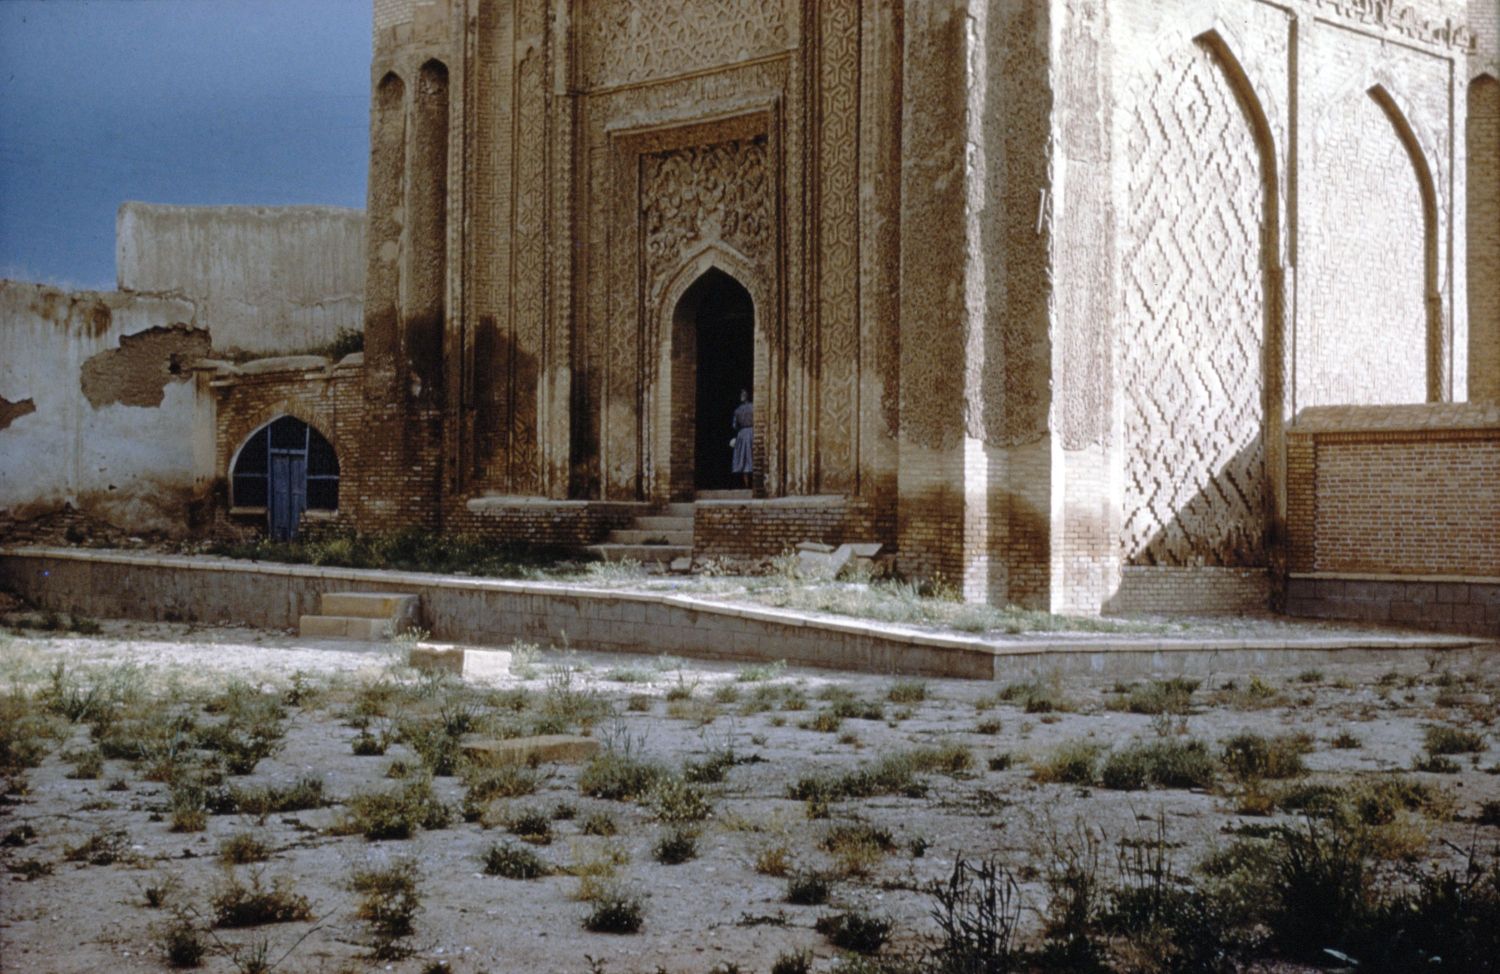 Gunbad-i Alaviyyan - Exterior view of the entrance.